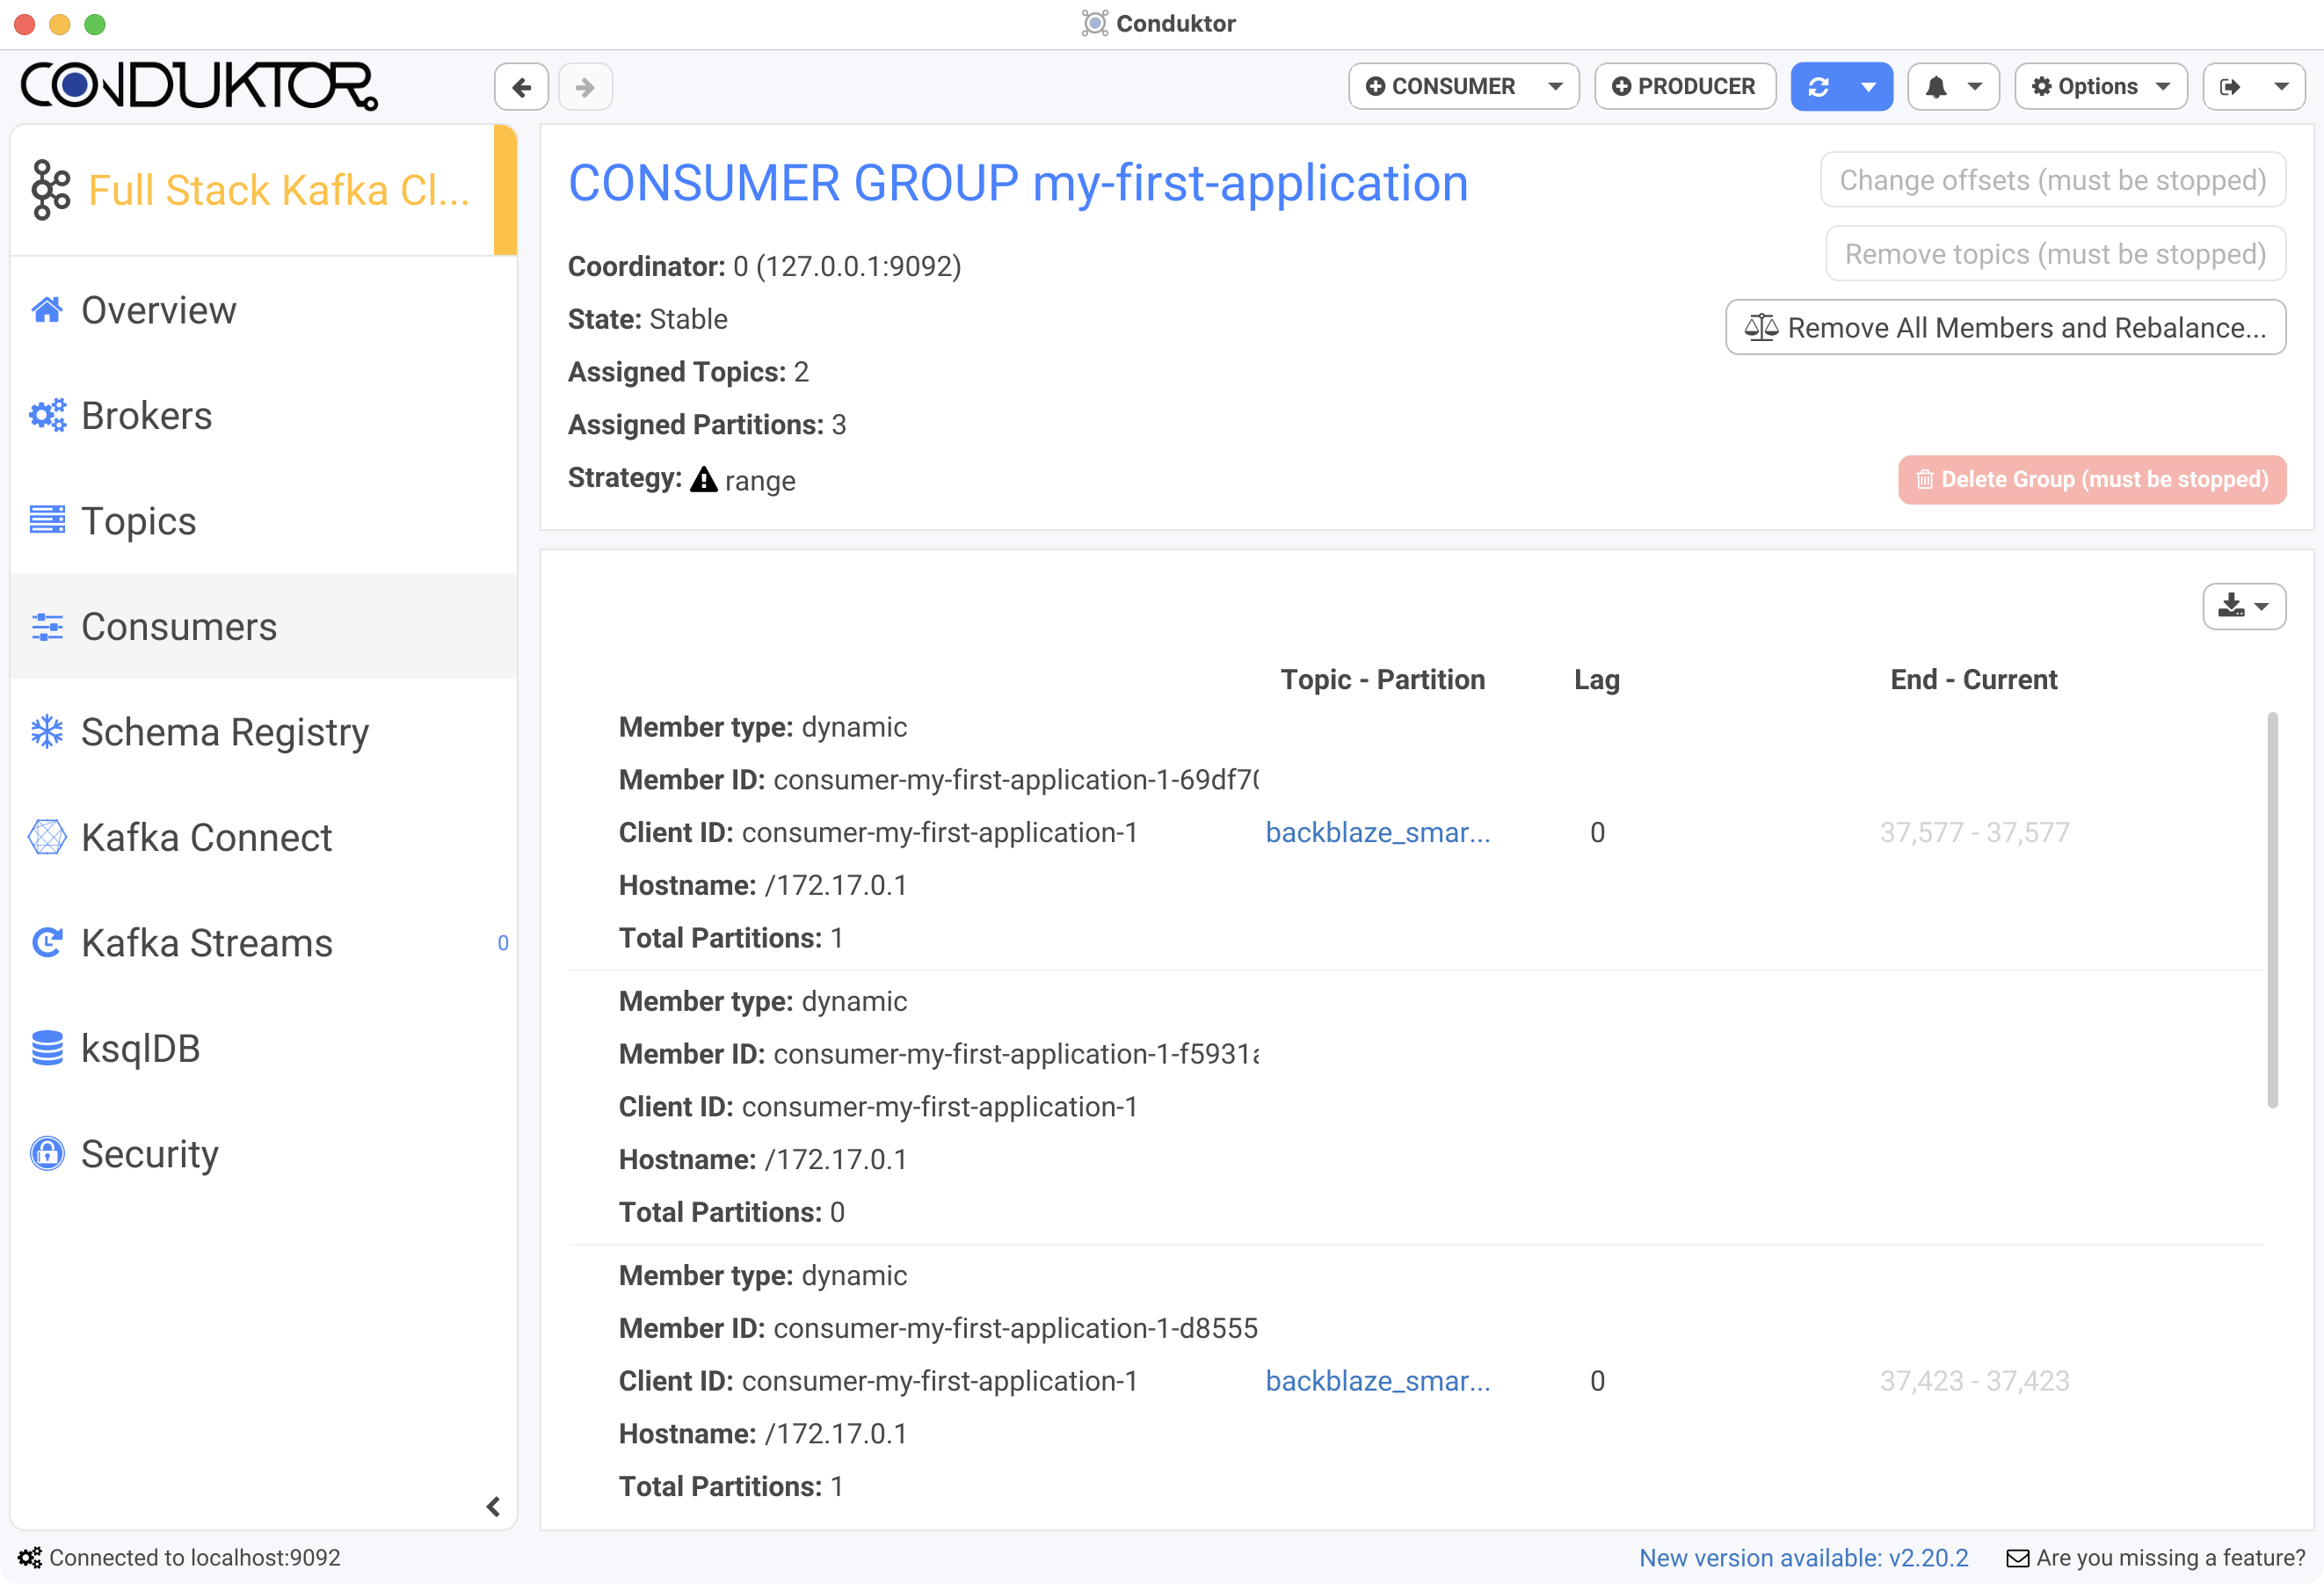 Conduktor screenshot showing Kafka Consumer Group details